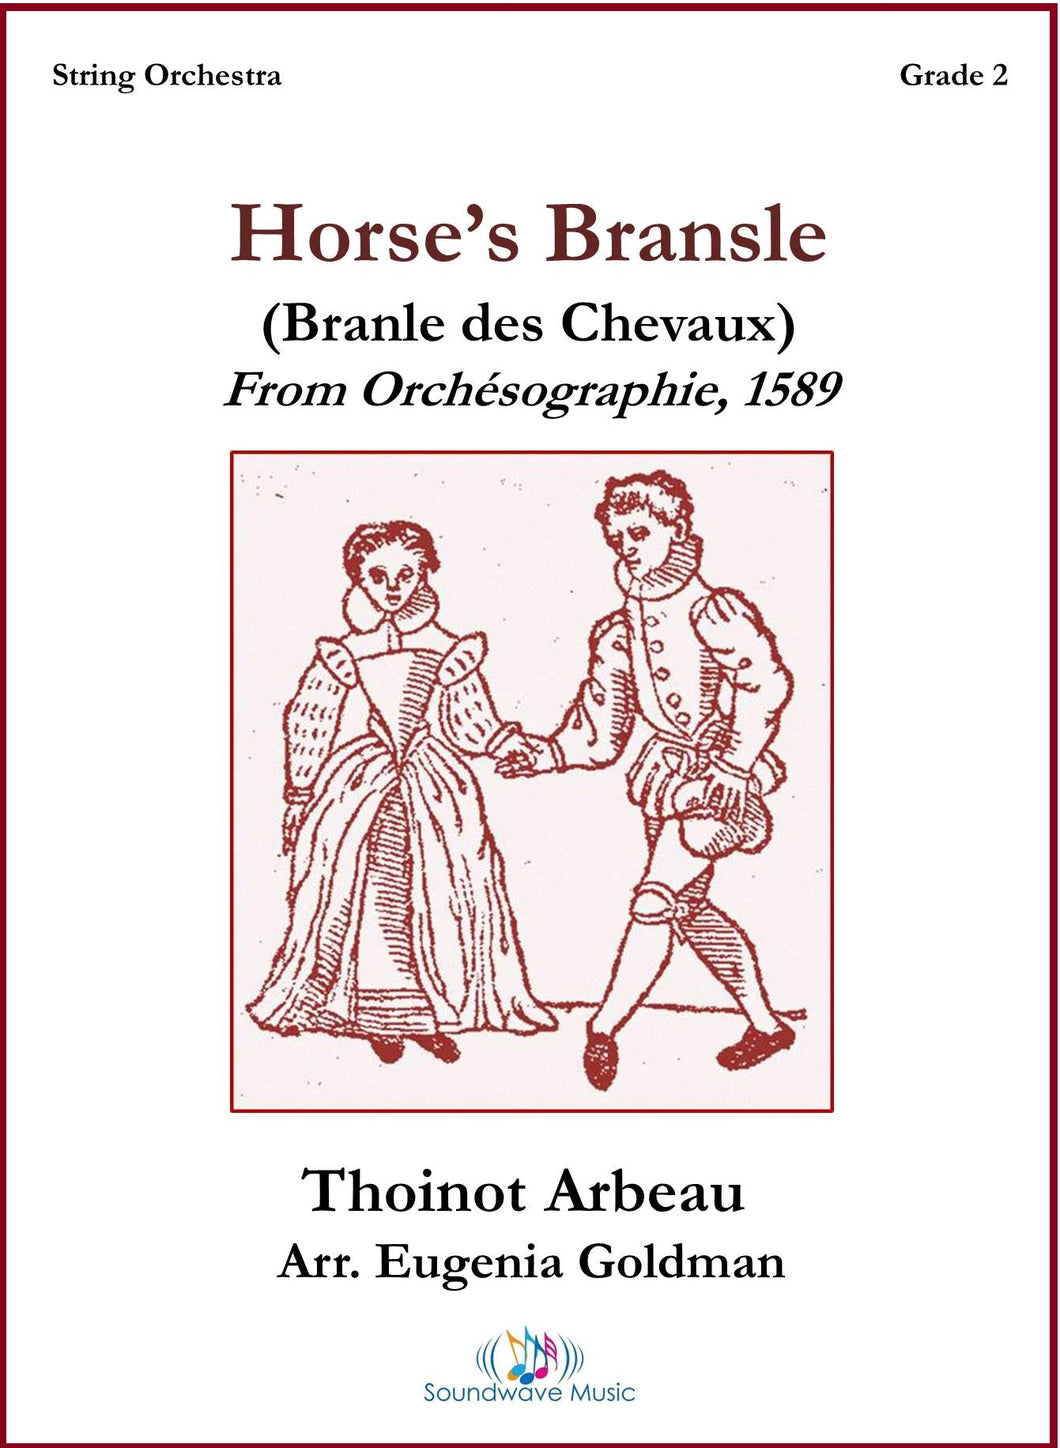 Horse's Bransle (Branle des Chevaux)